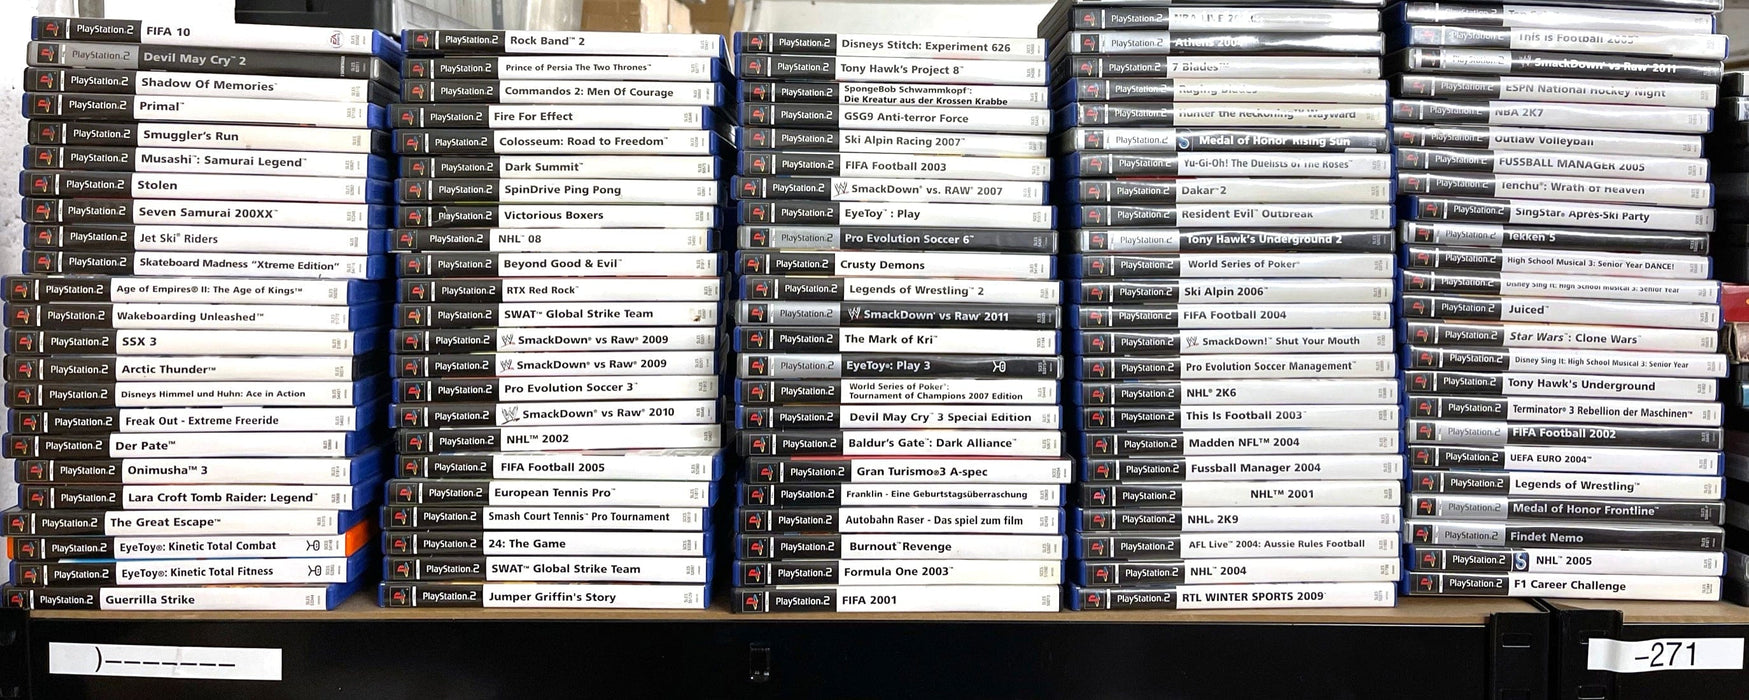 Glaciergames PlayStation 2 Game Tony Hawk's Proving Ground PlayStation 2 (Nr.33)